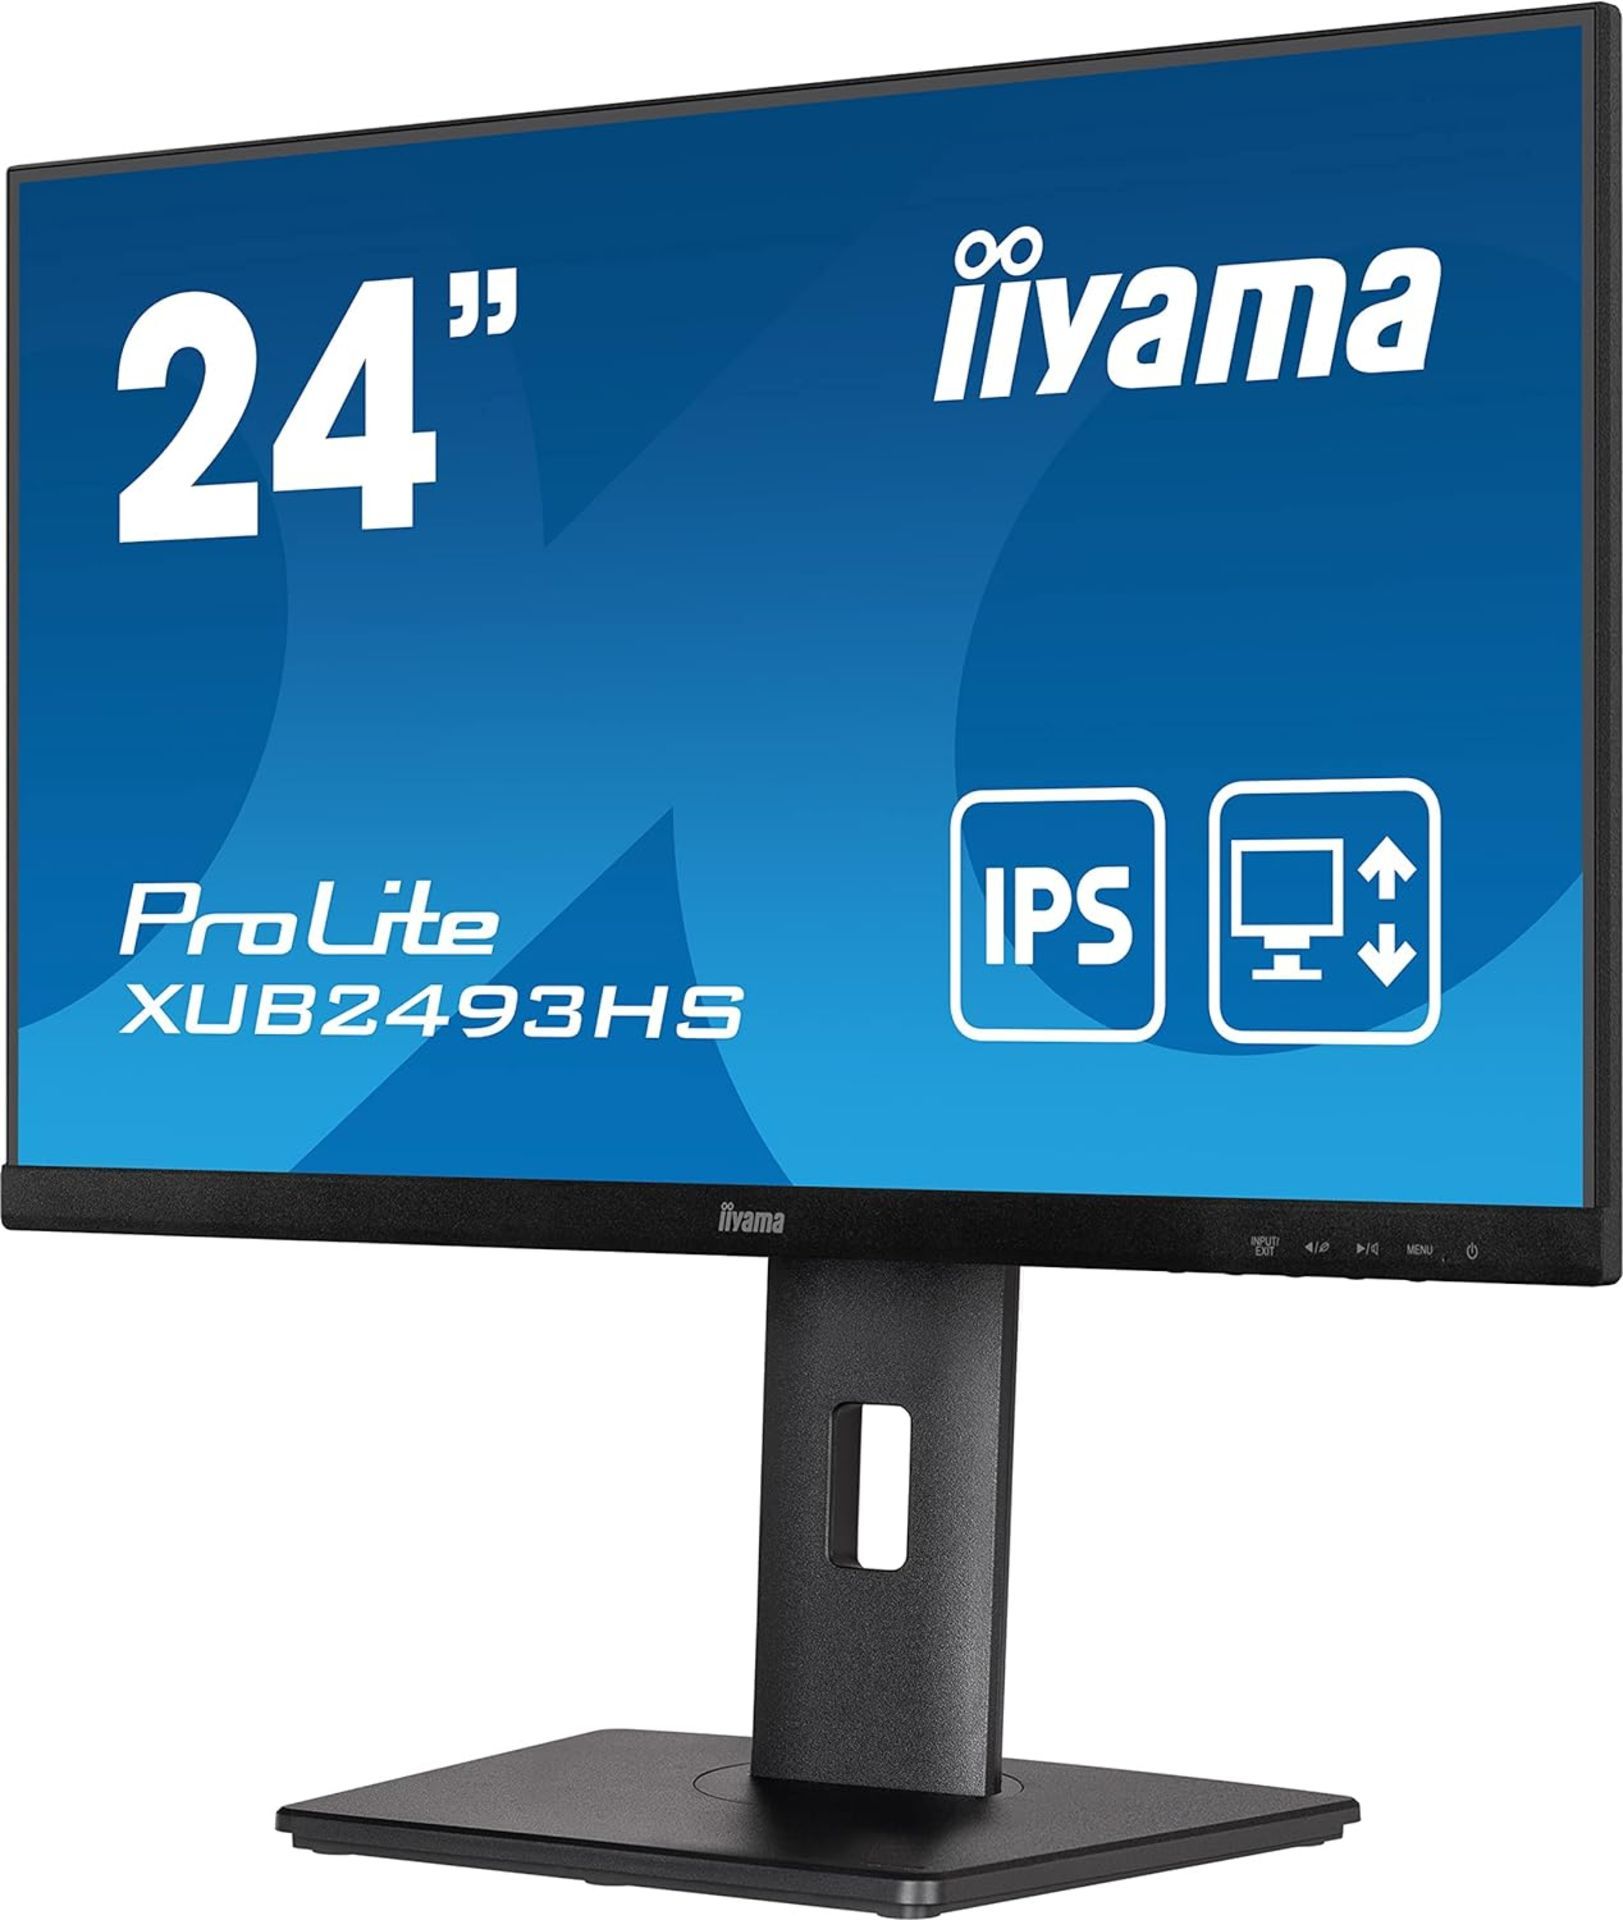 (GRADE A) IIYAMA ProLite XUB2493HS 24 Inch IPS LCD with Slim Bezel. RRP £129.99. (R8R). 4ms, Full HD - Image 2 of 4